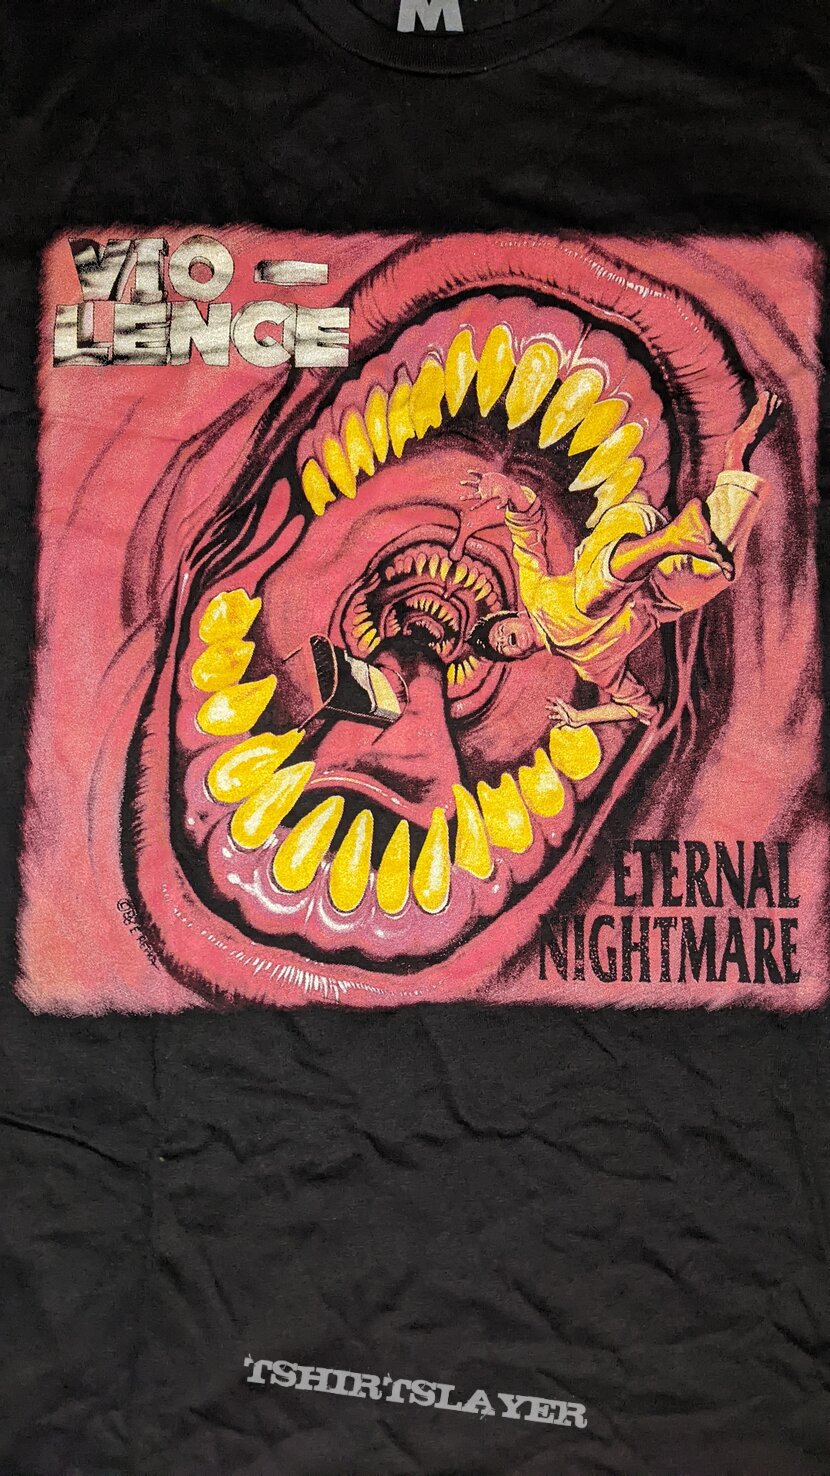 Vio-Lence - Eternal Nightmare / A World of Screams 2022 tour shirt